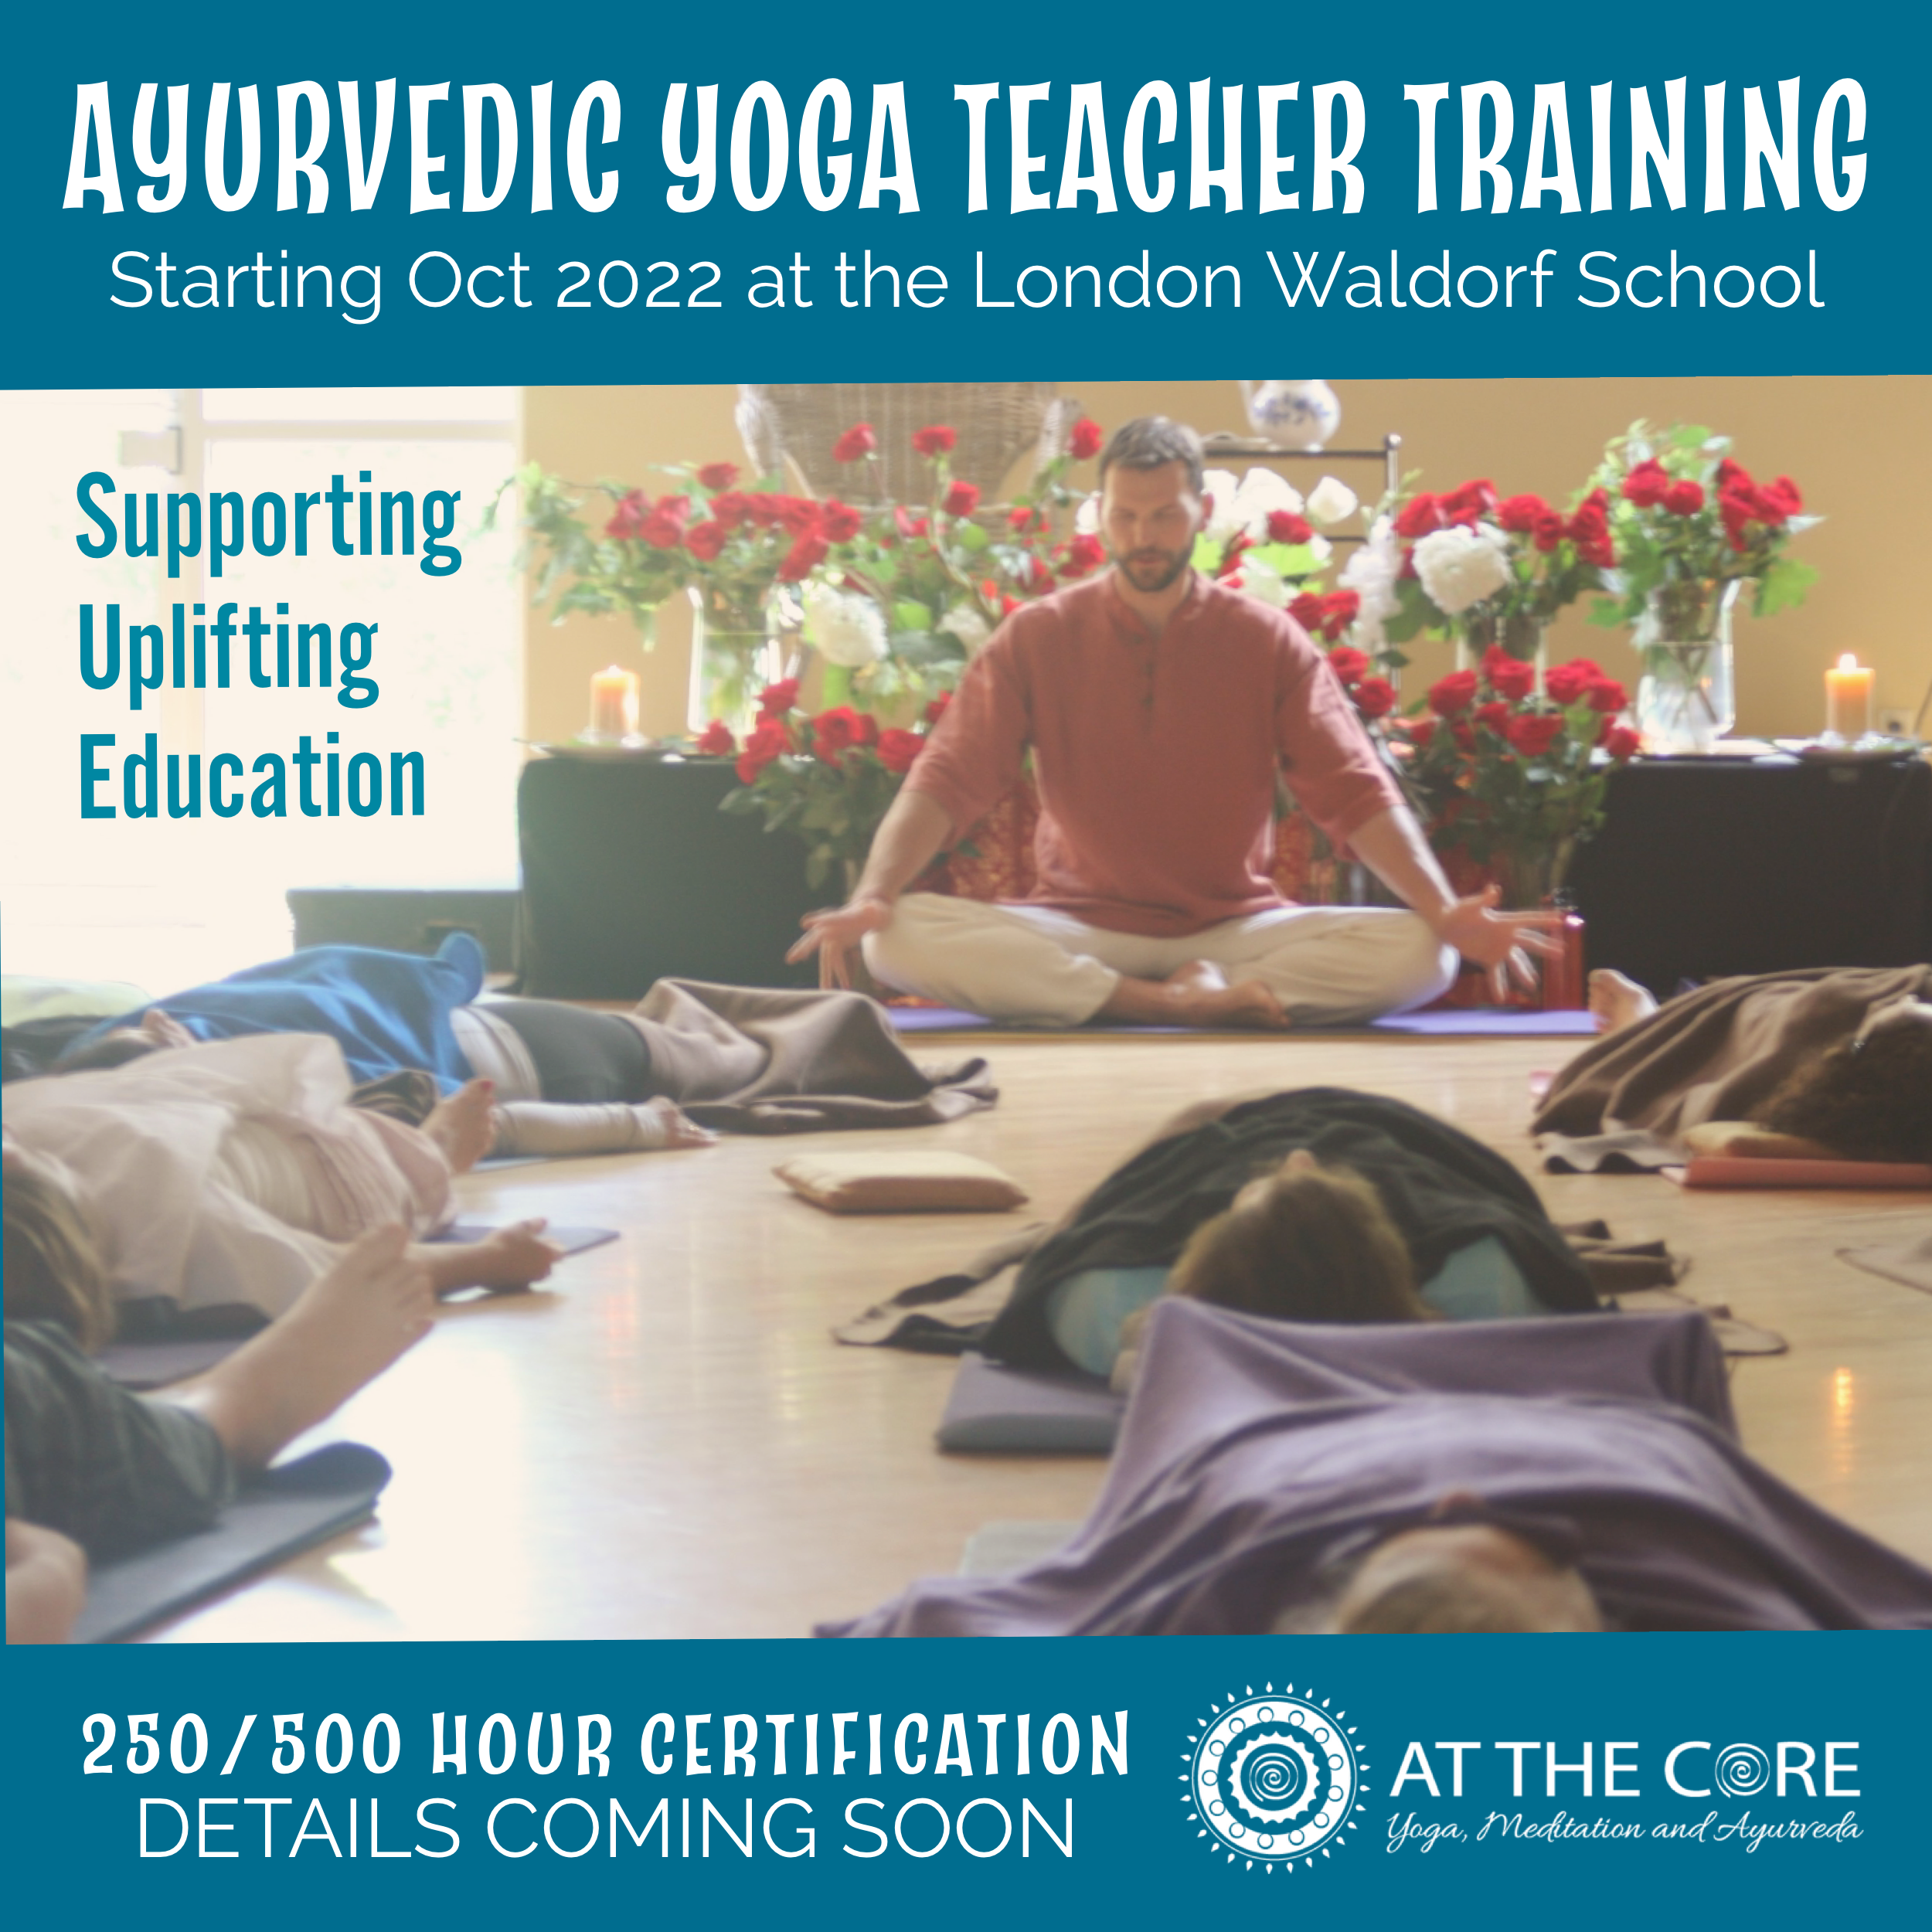 YTT AT THE CORE Ayurveda Yoga Teacher Training in London Ontario at the London Waldorf School